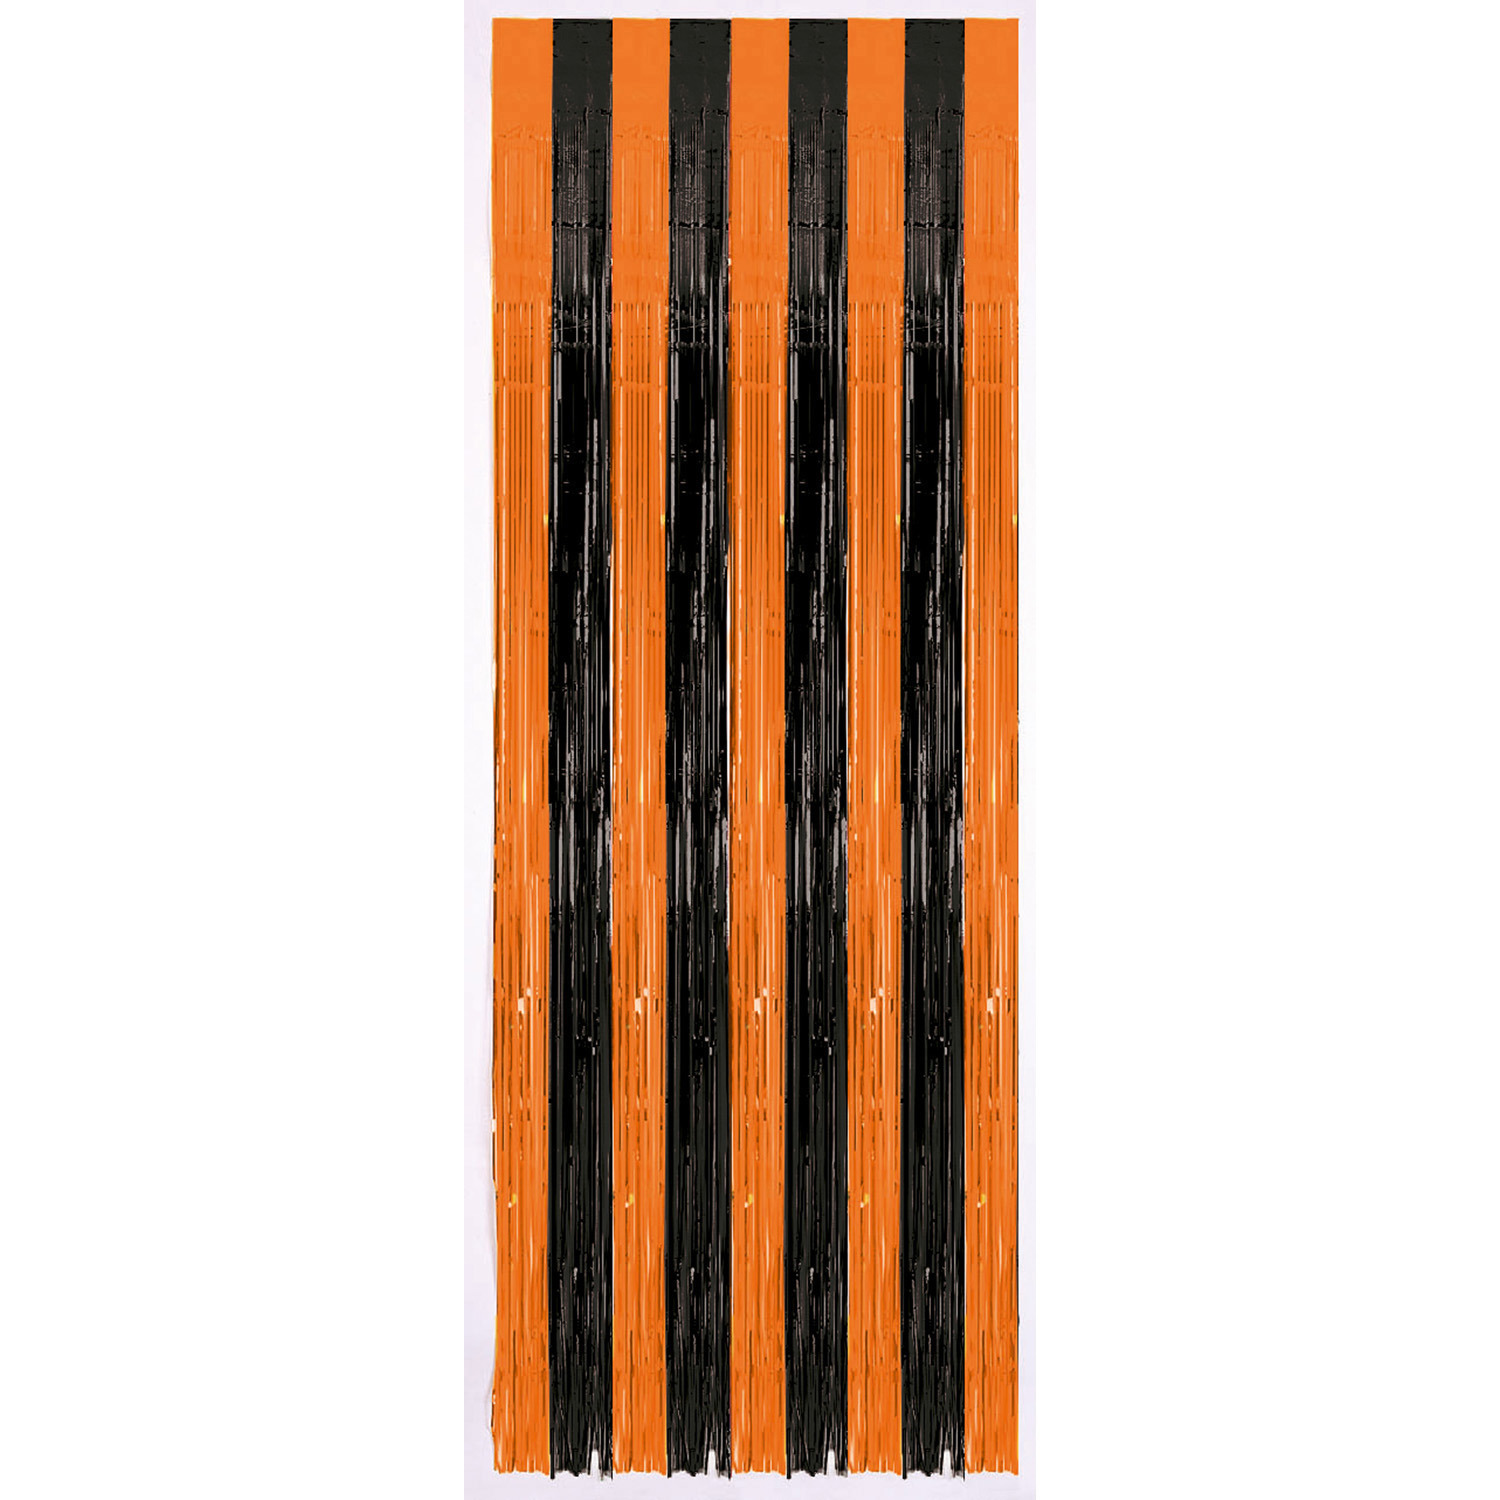 3x stuks folie deurgordijn zwart-oranje metallic 243 x 91 cm